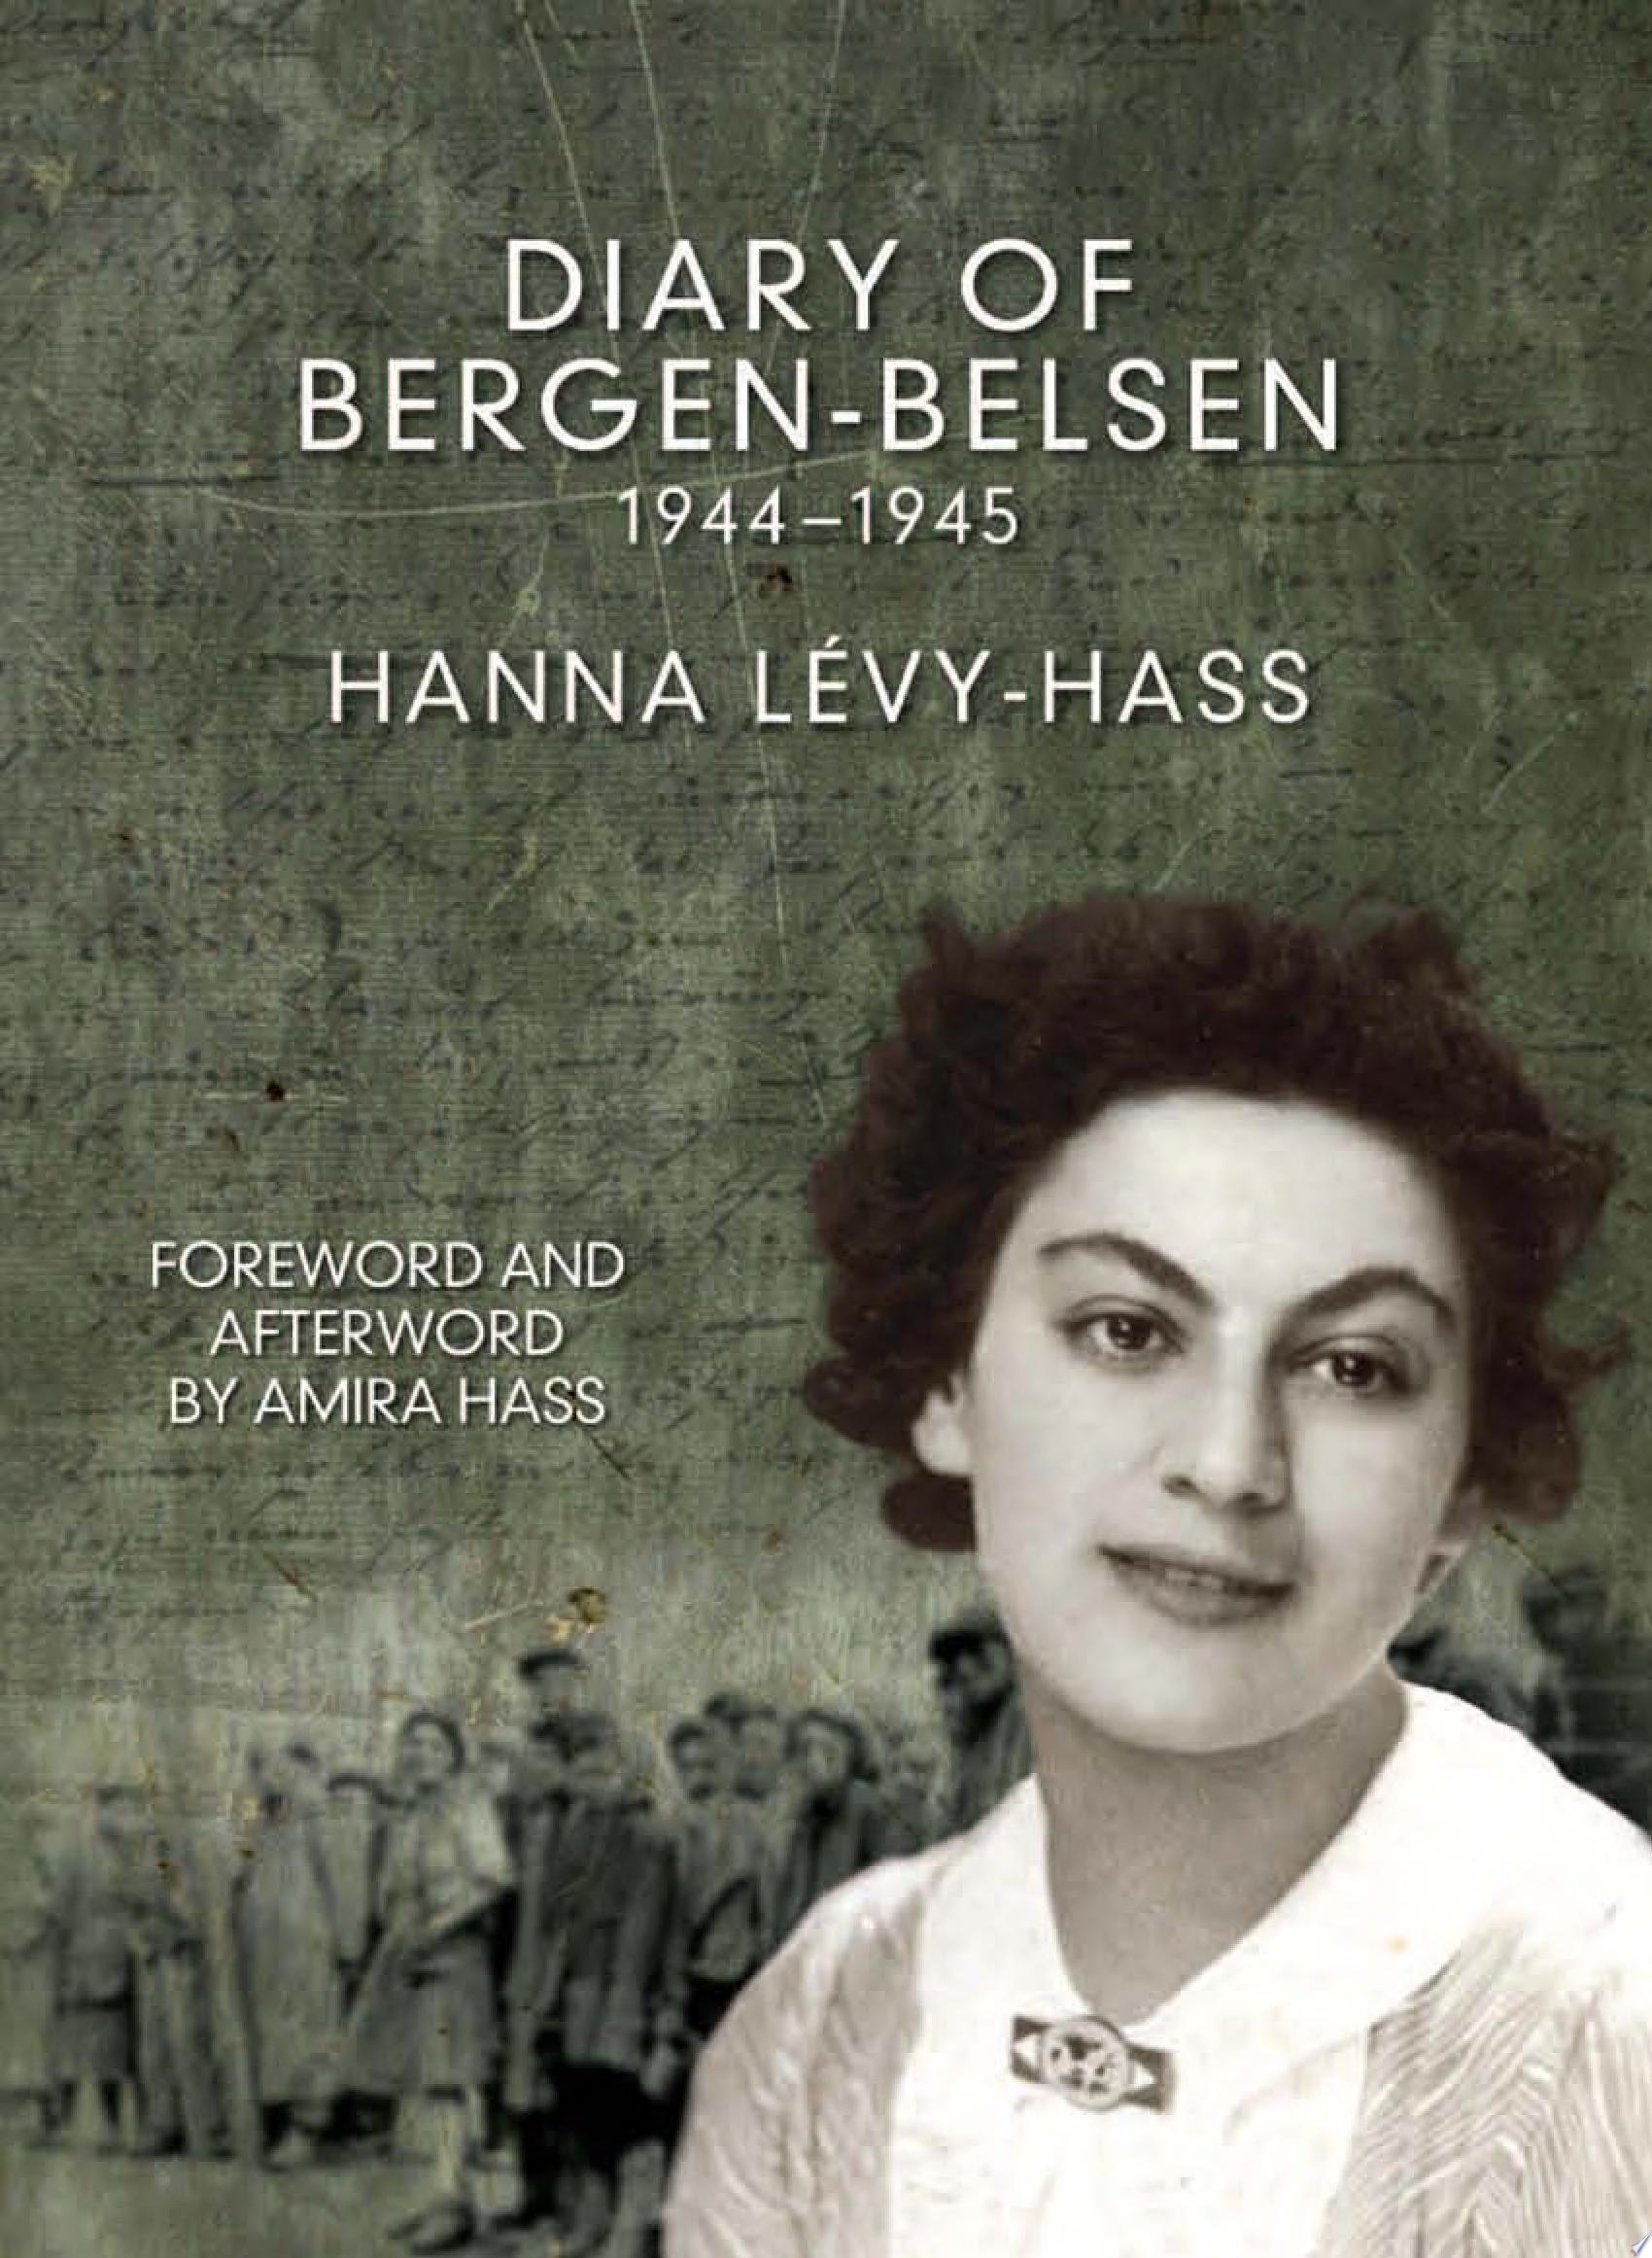 Image for "Diary of Bergen-Belsen"